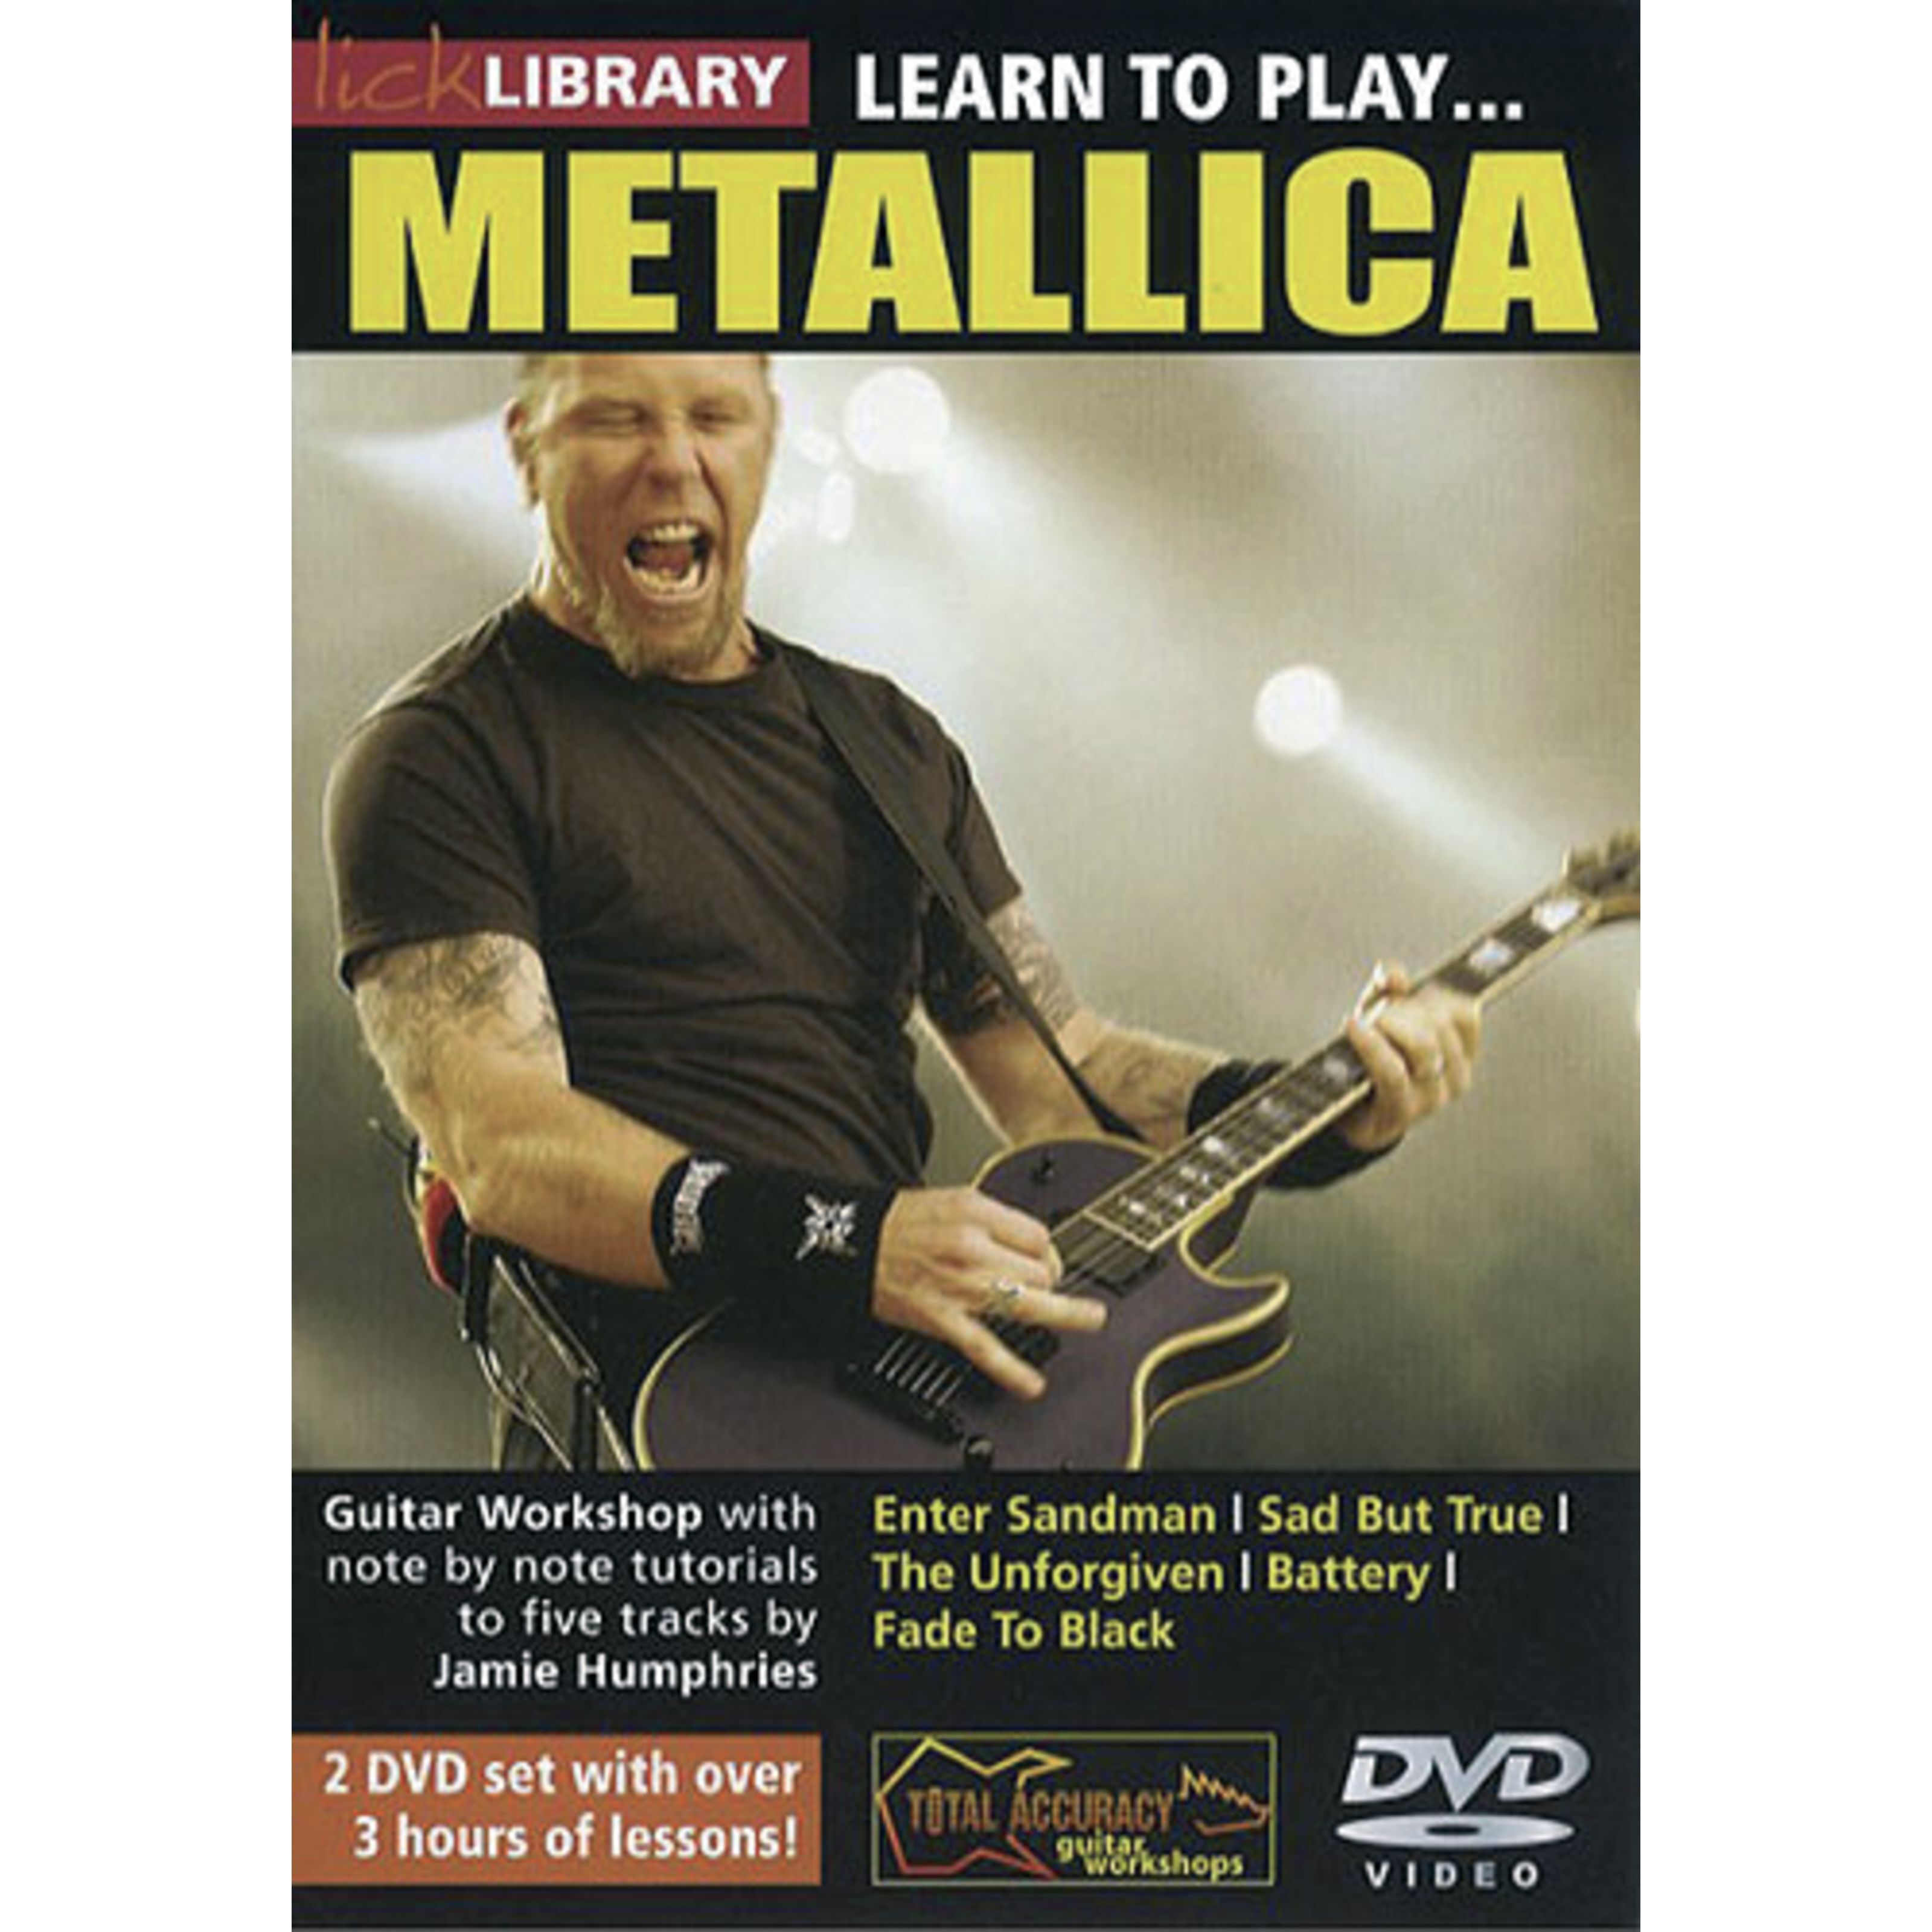 Roadrock International Lick Library: Learn To Play Metallica DVD - DVD